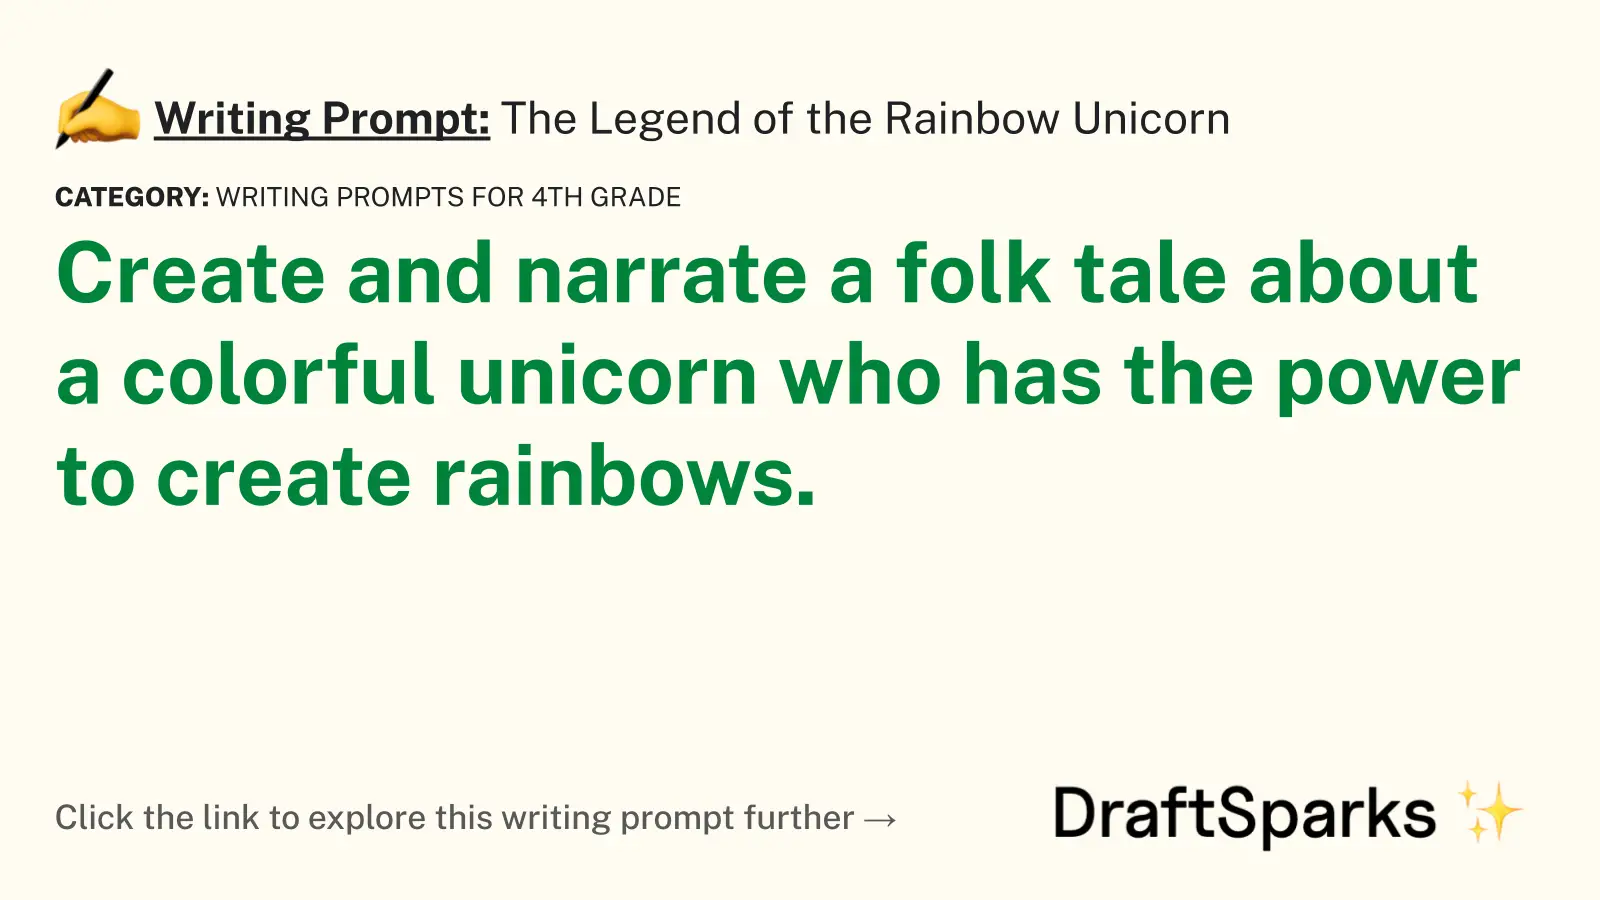 The Legend of the Rainbow Unicorn